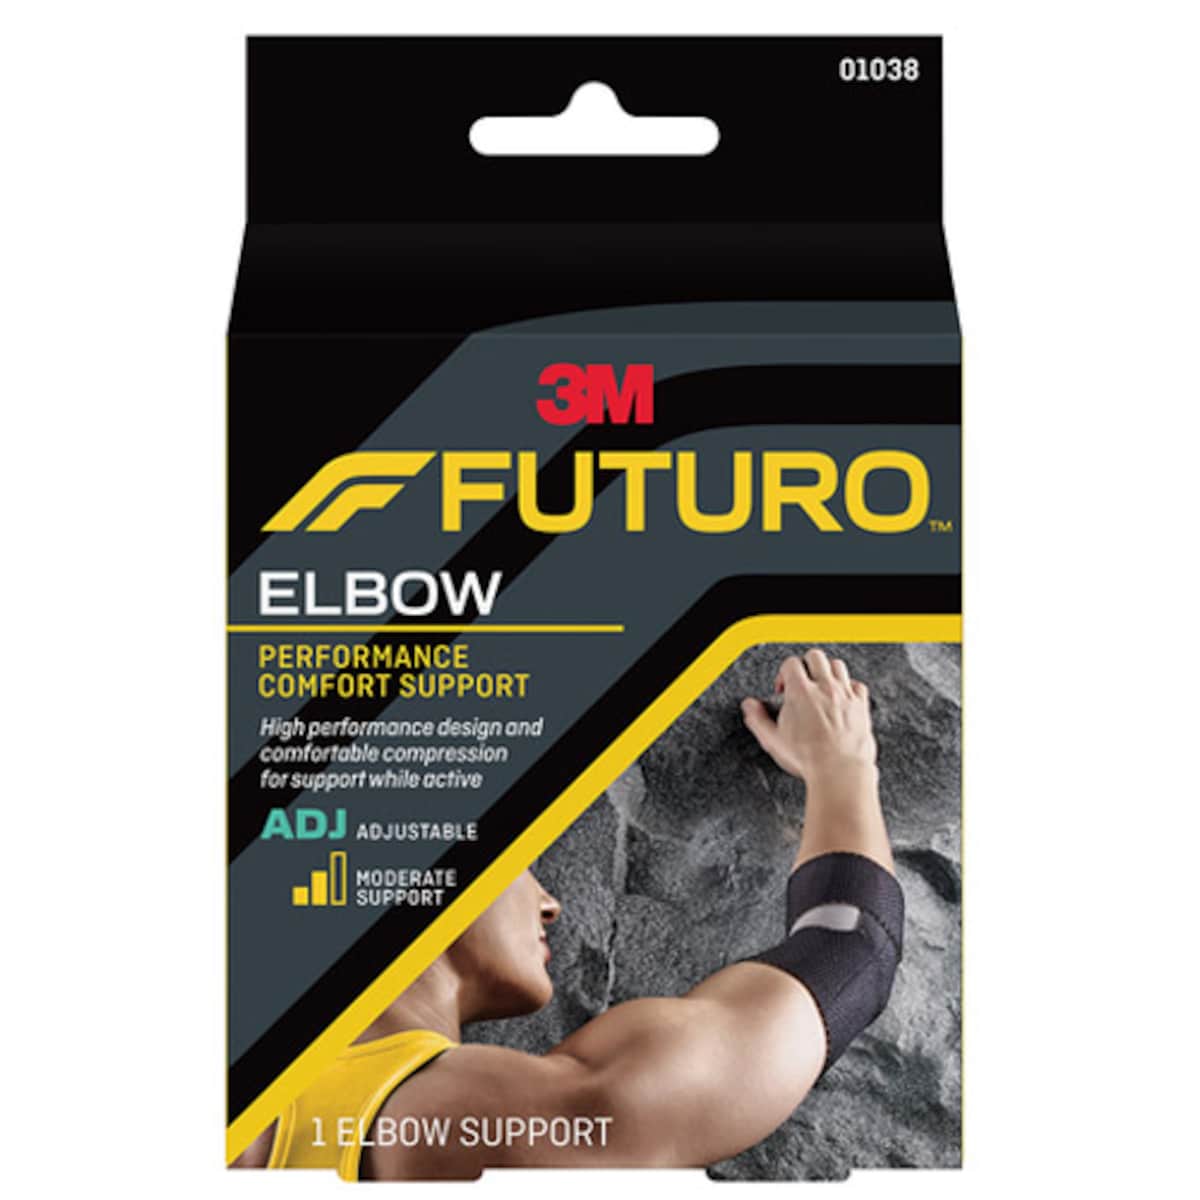 Futuro Performance Comfort Elbow Support Adjustable